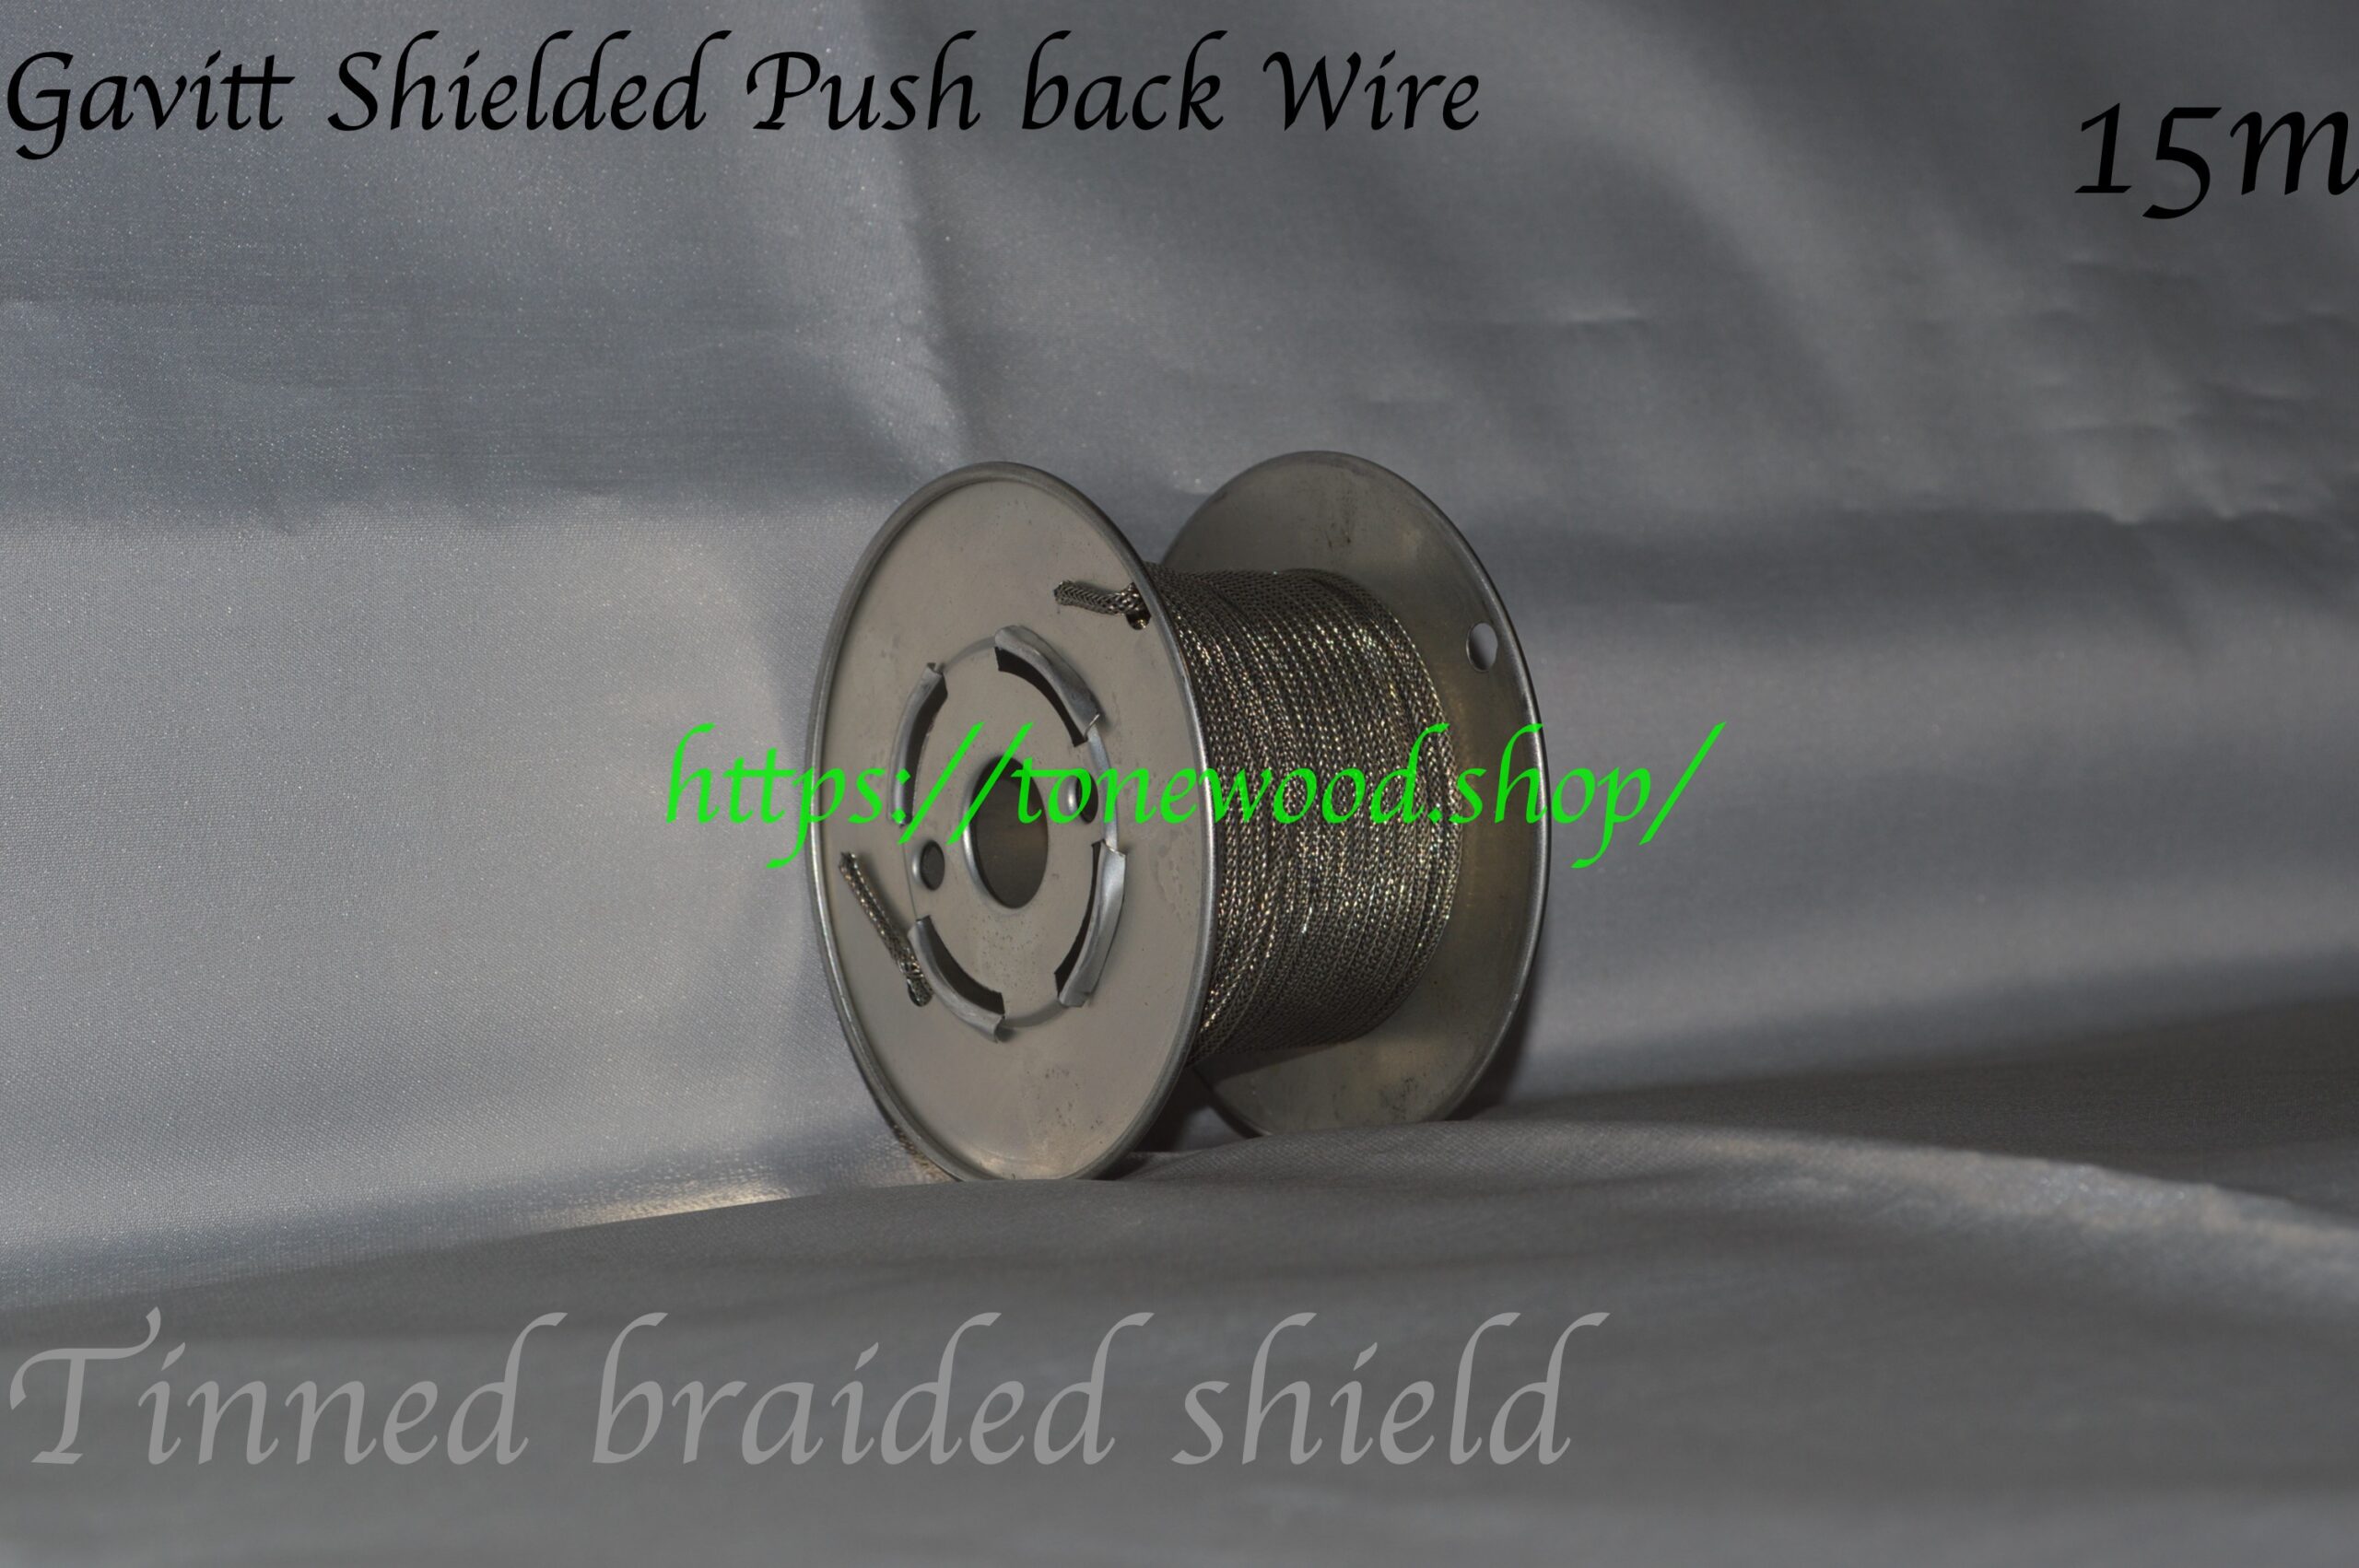 Gavitt-Shielded-Push-back-Wire-15m